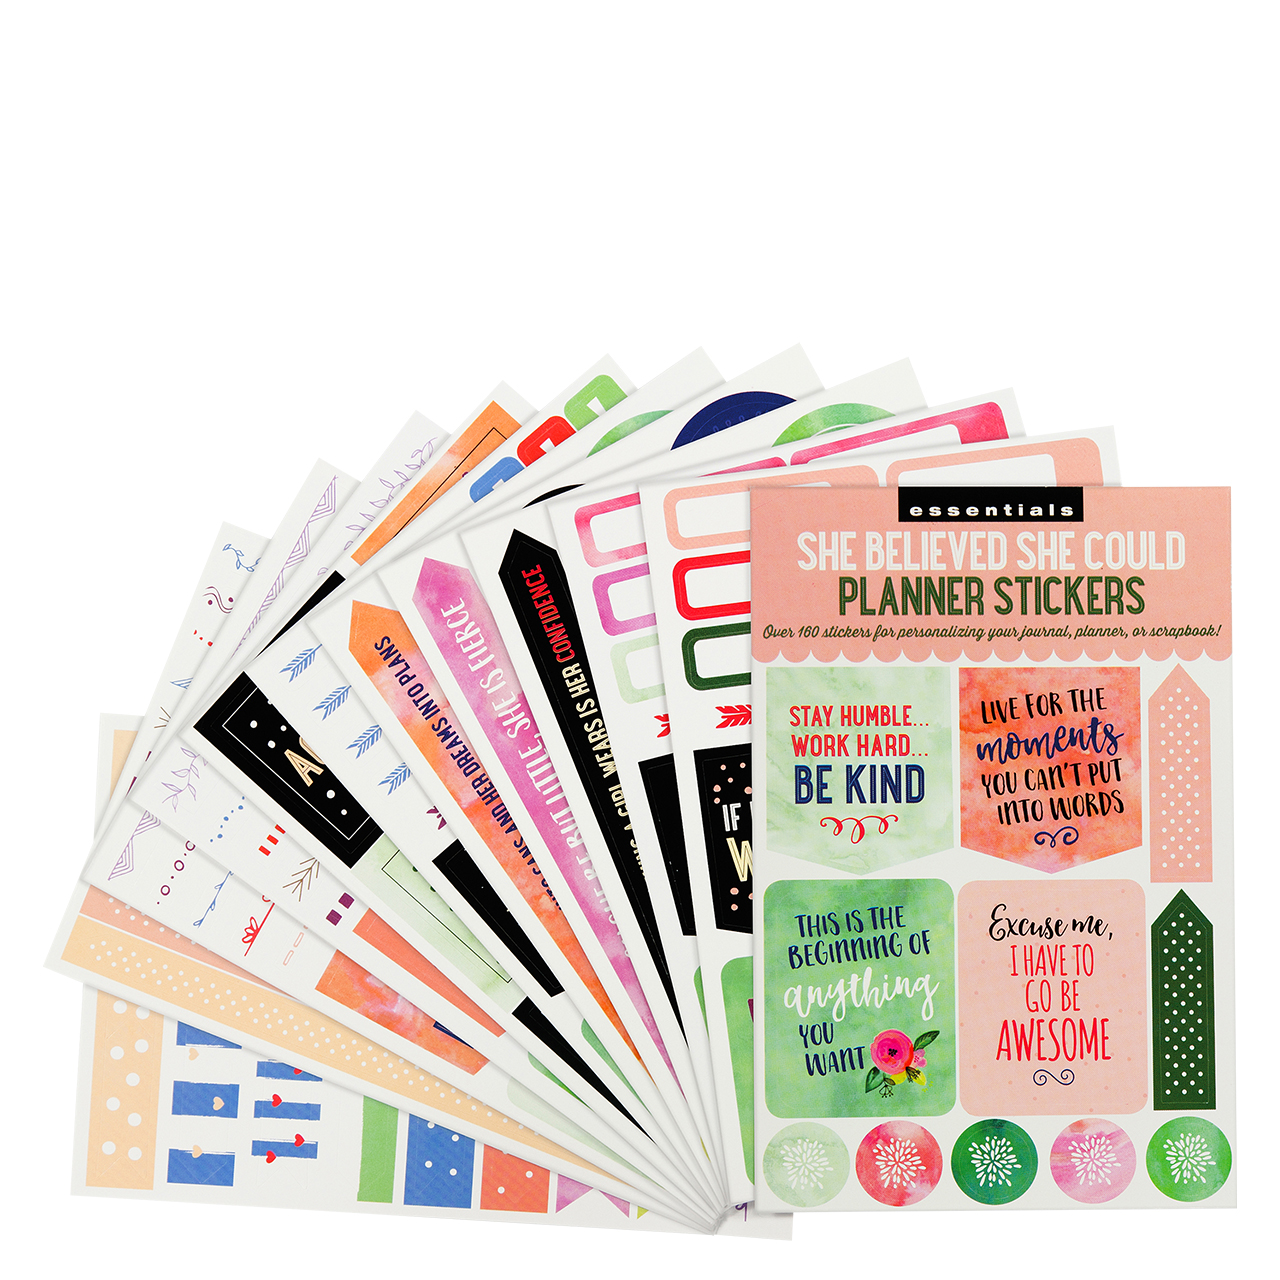 Peter Pauper Press - Essentials Habit Tracker Planner Stickers